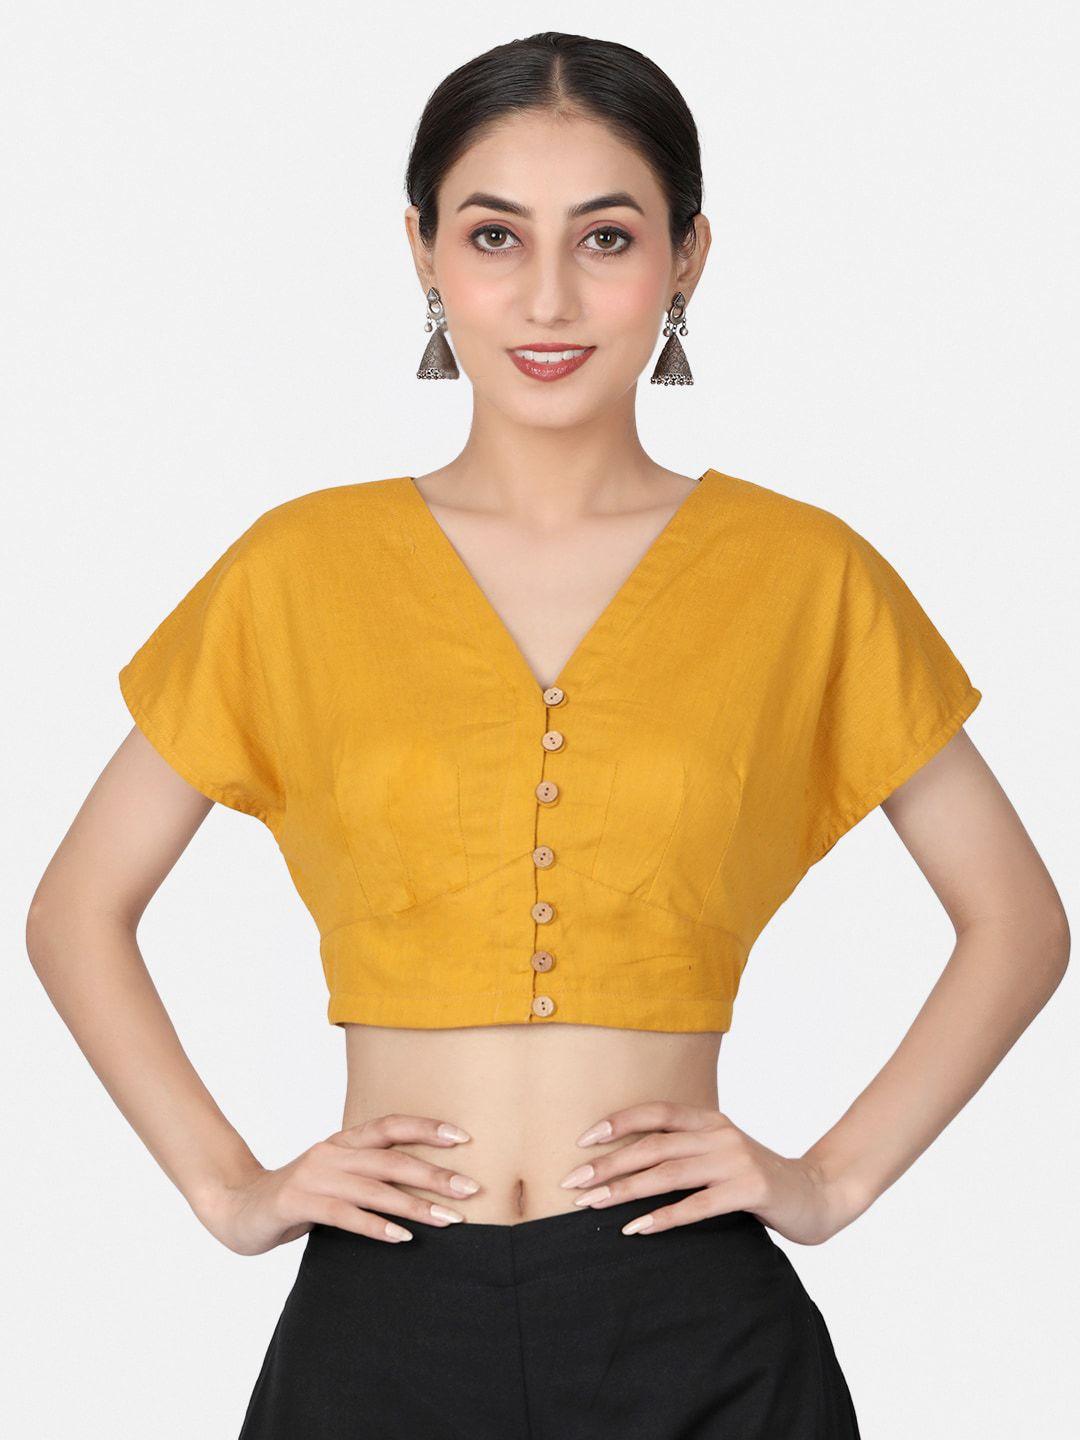 llajja pure cotton readymade saree blouse